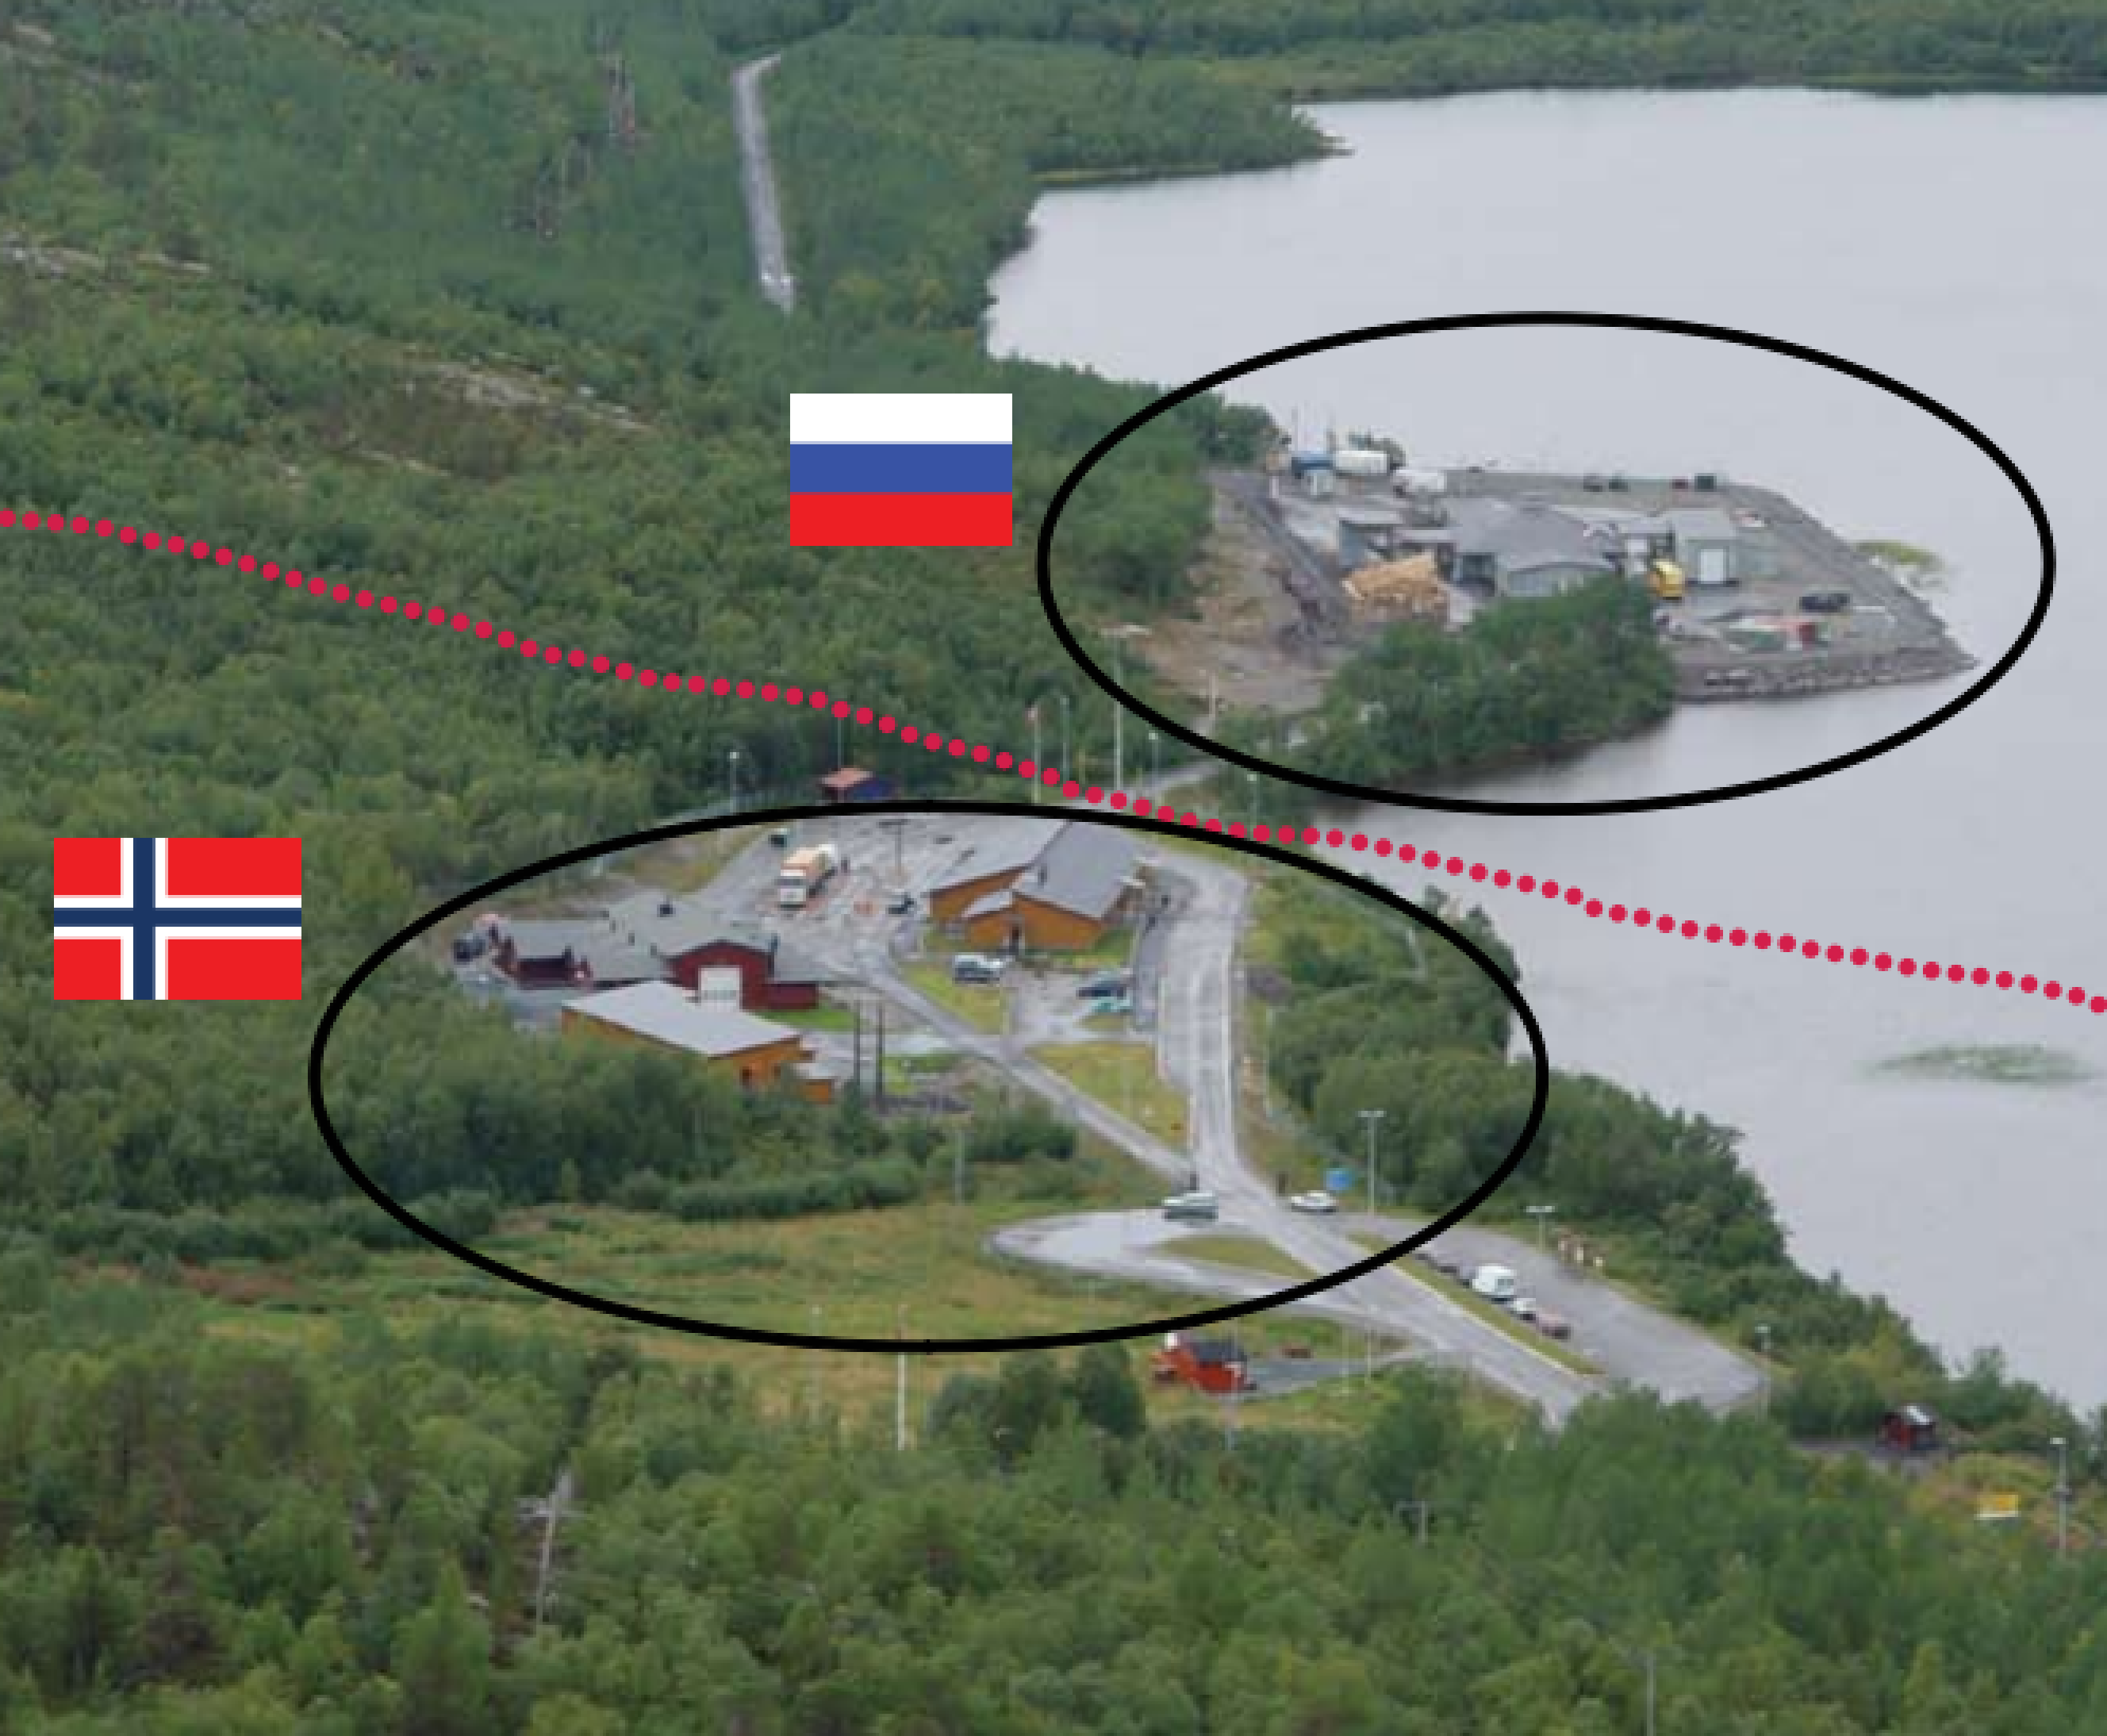 Граница с норвегией. Стурскуг. Печенга граница с Норвегией. Никель граница с Норвегией. Граница Норвегии и России в Мурманске.